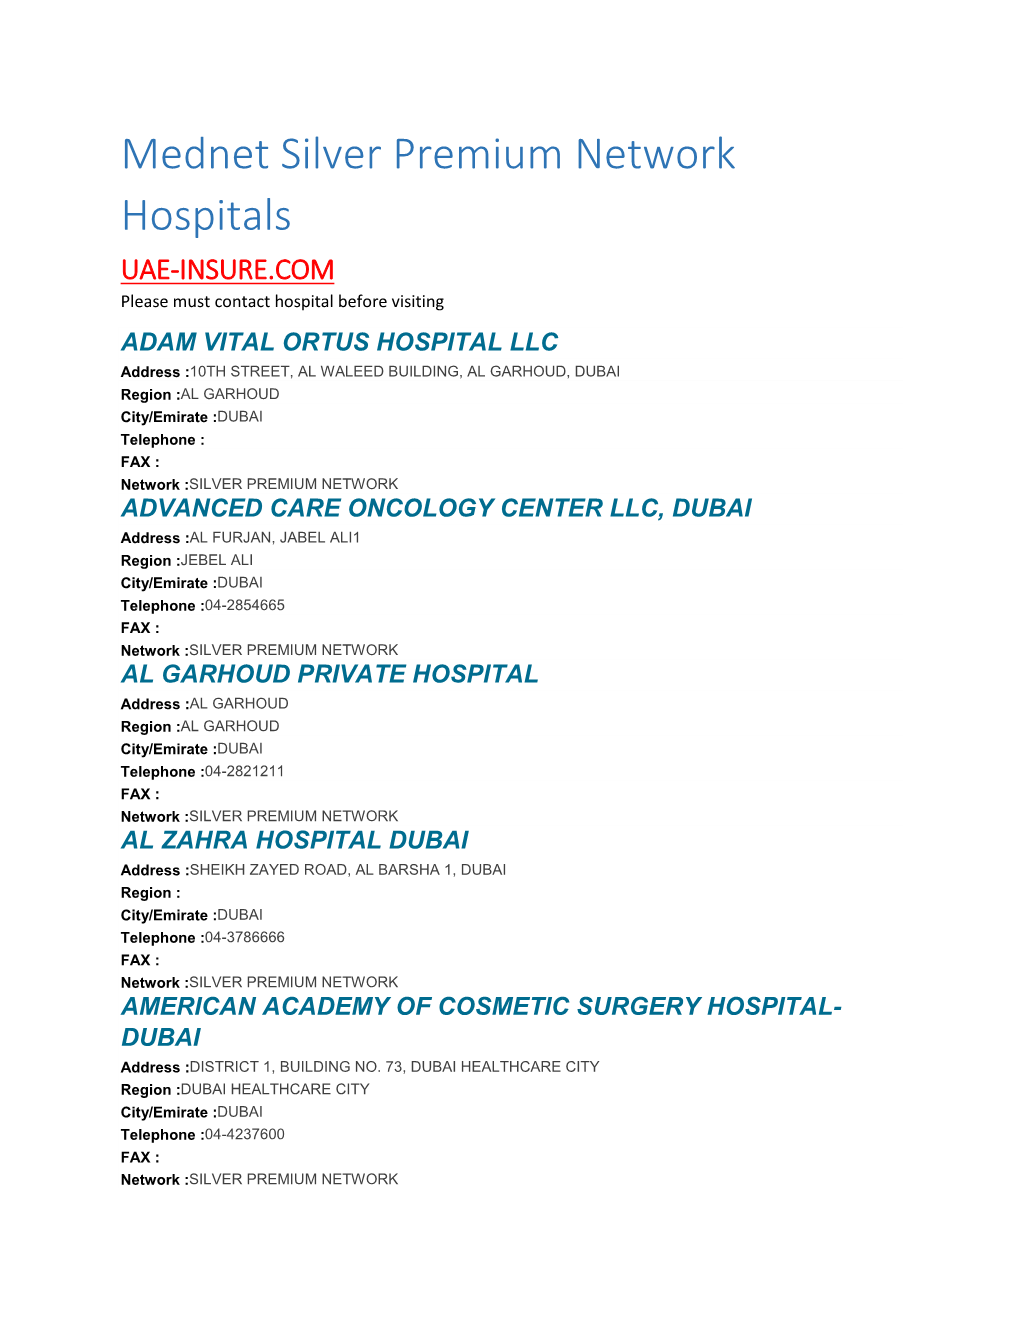 Mednet Silver Premium Network Hospitals